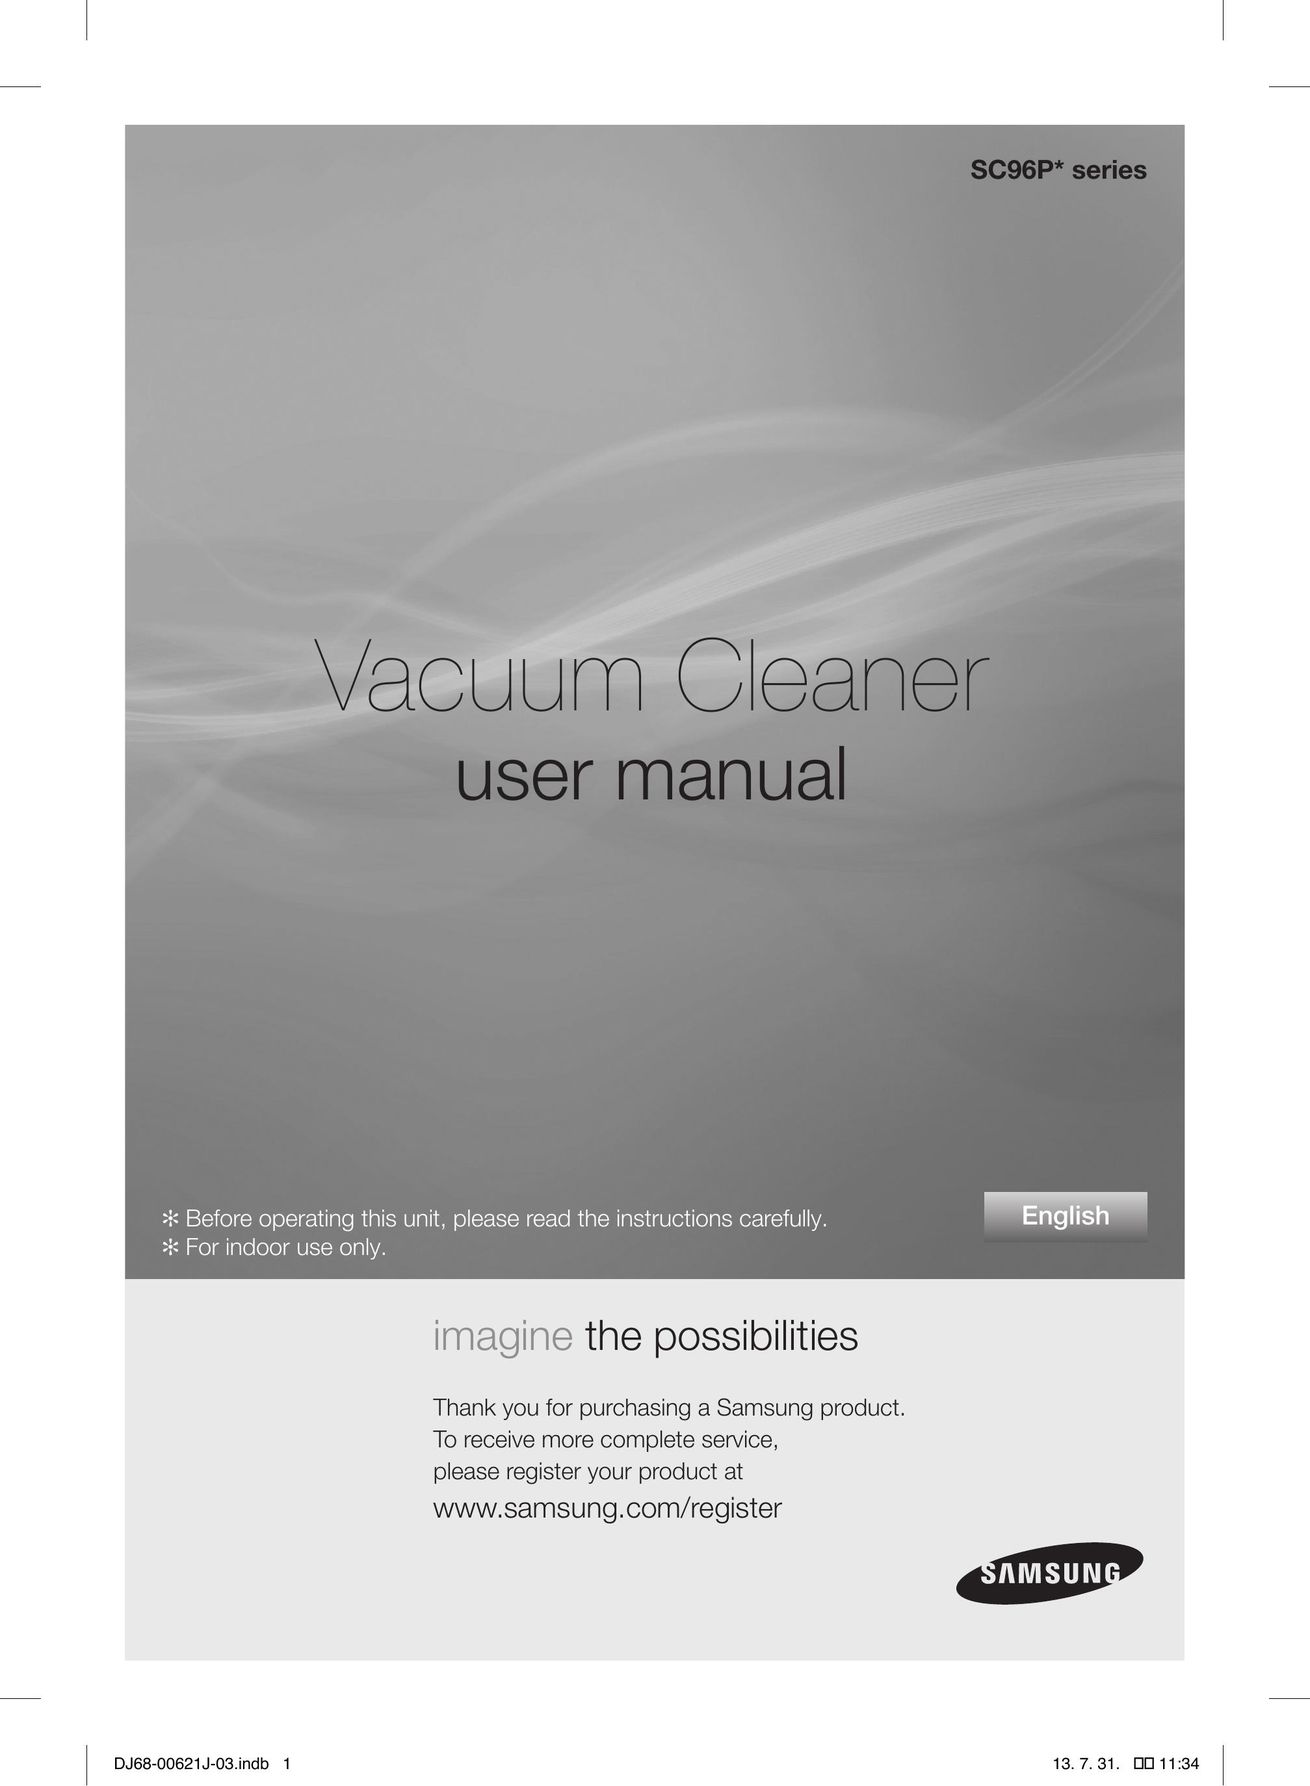 Samsung VCC96P0H1G Vacuum Cleaner User Manual